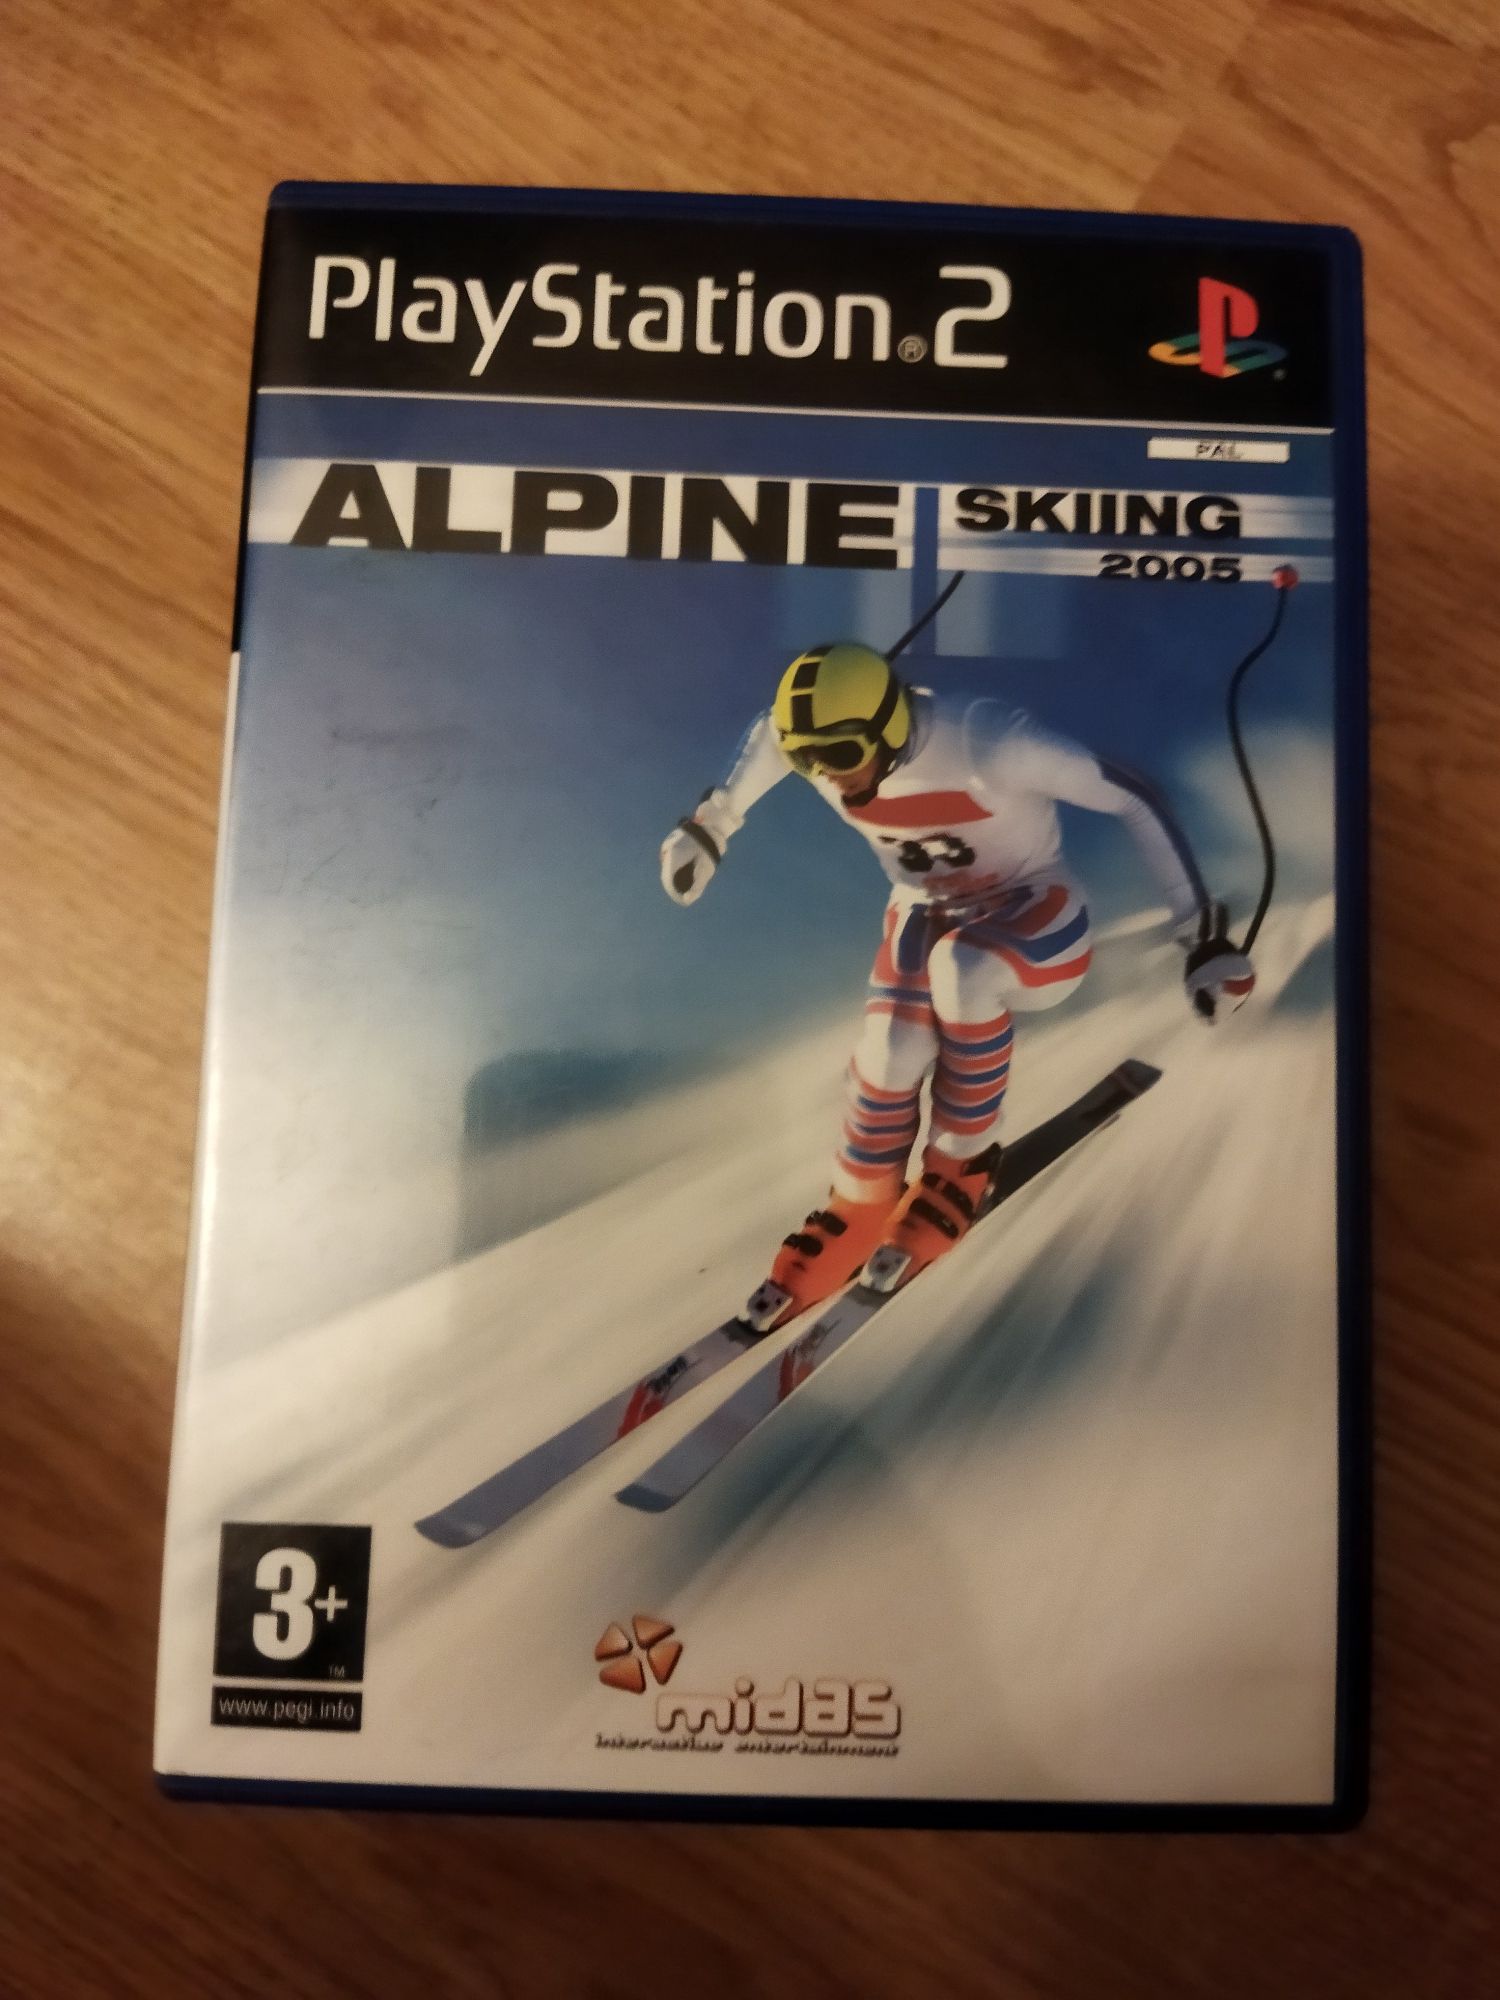 Alpine skining 2005 na konsole PlayStation 2 ps2